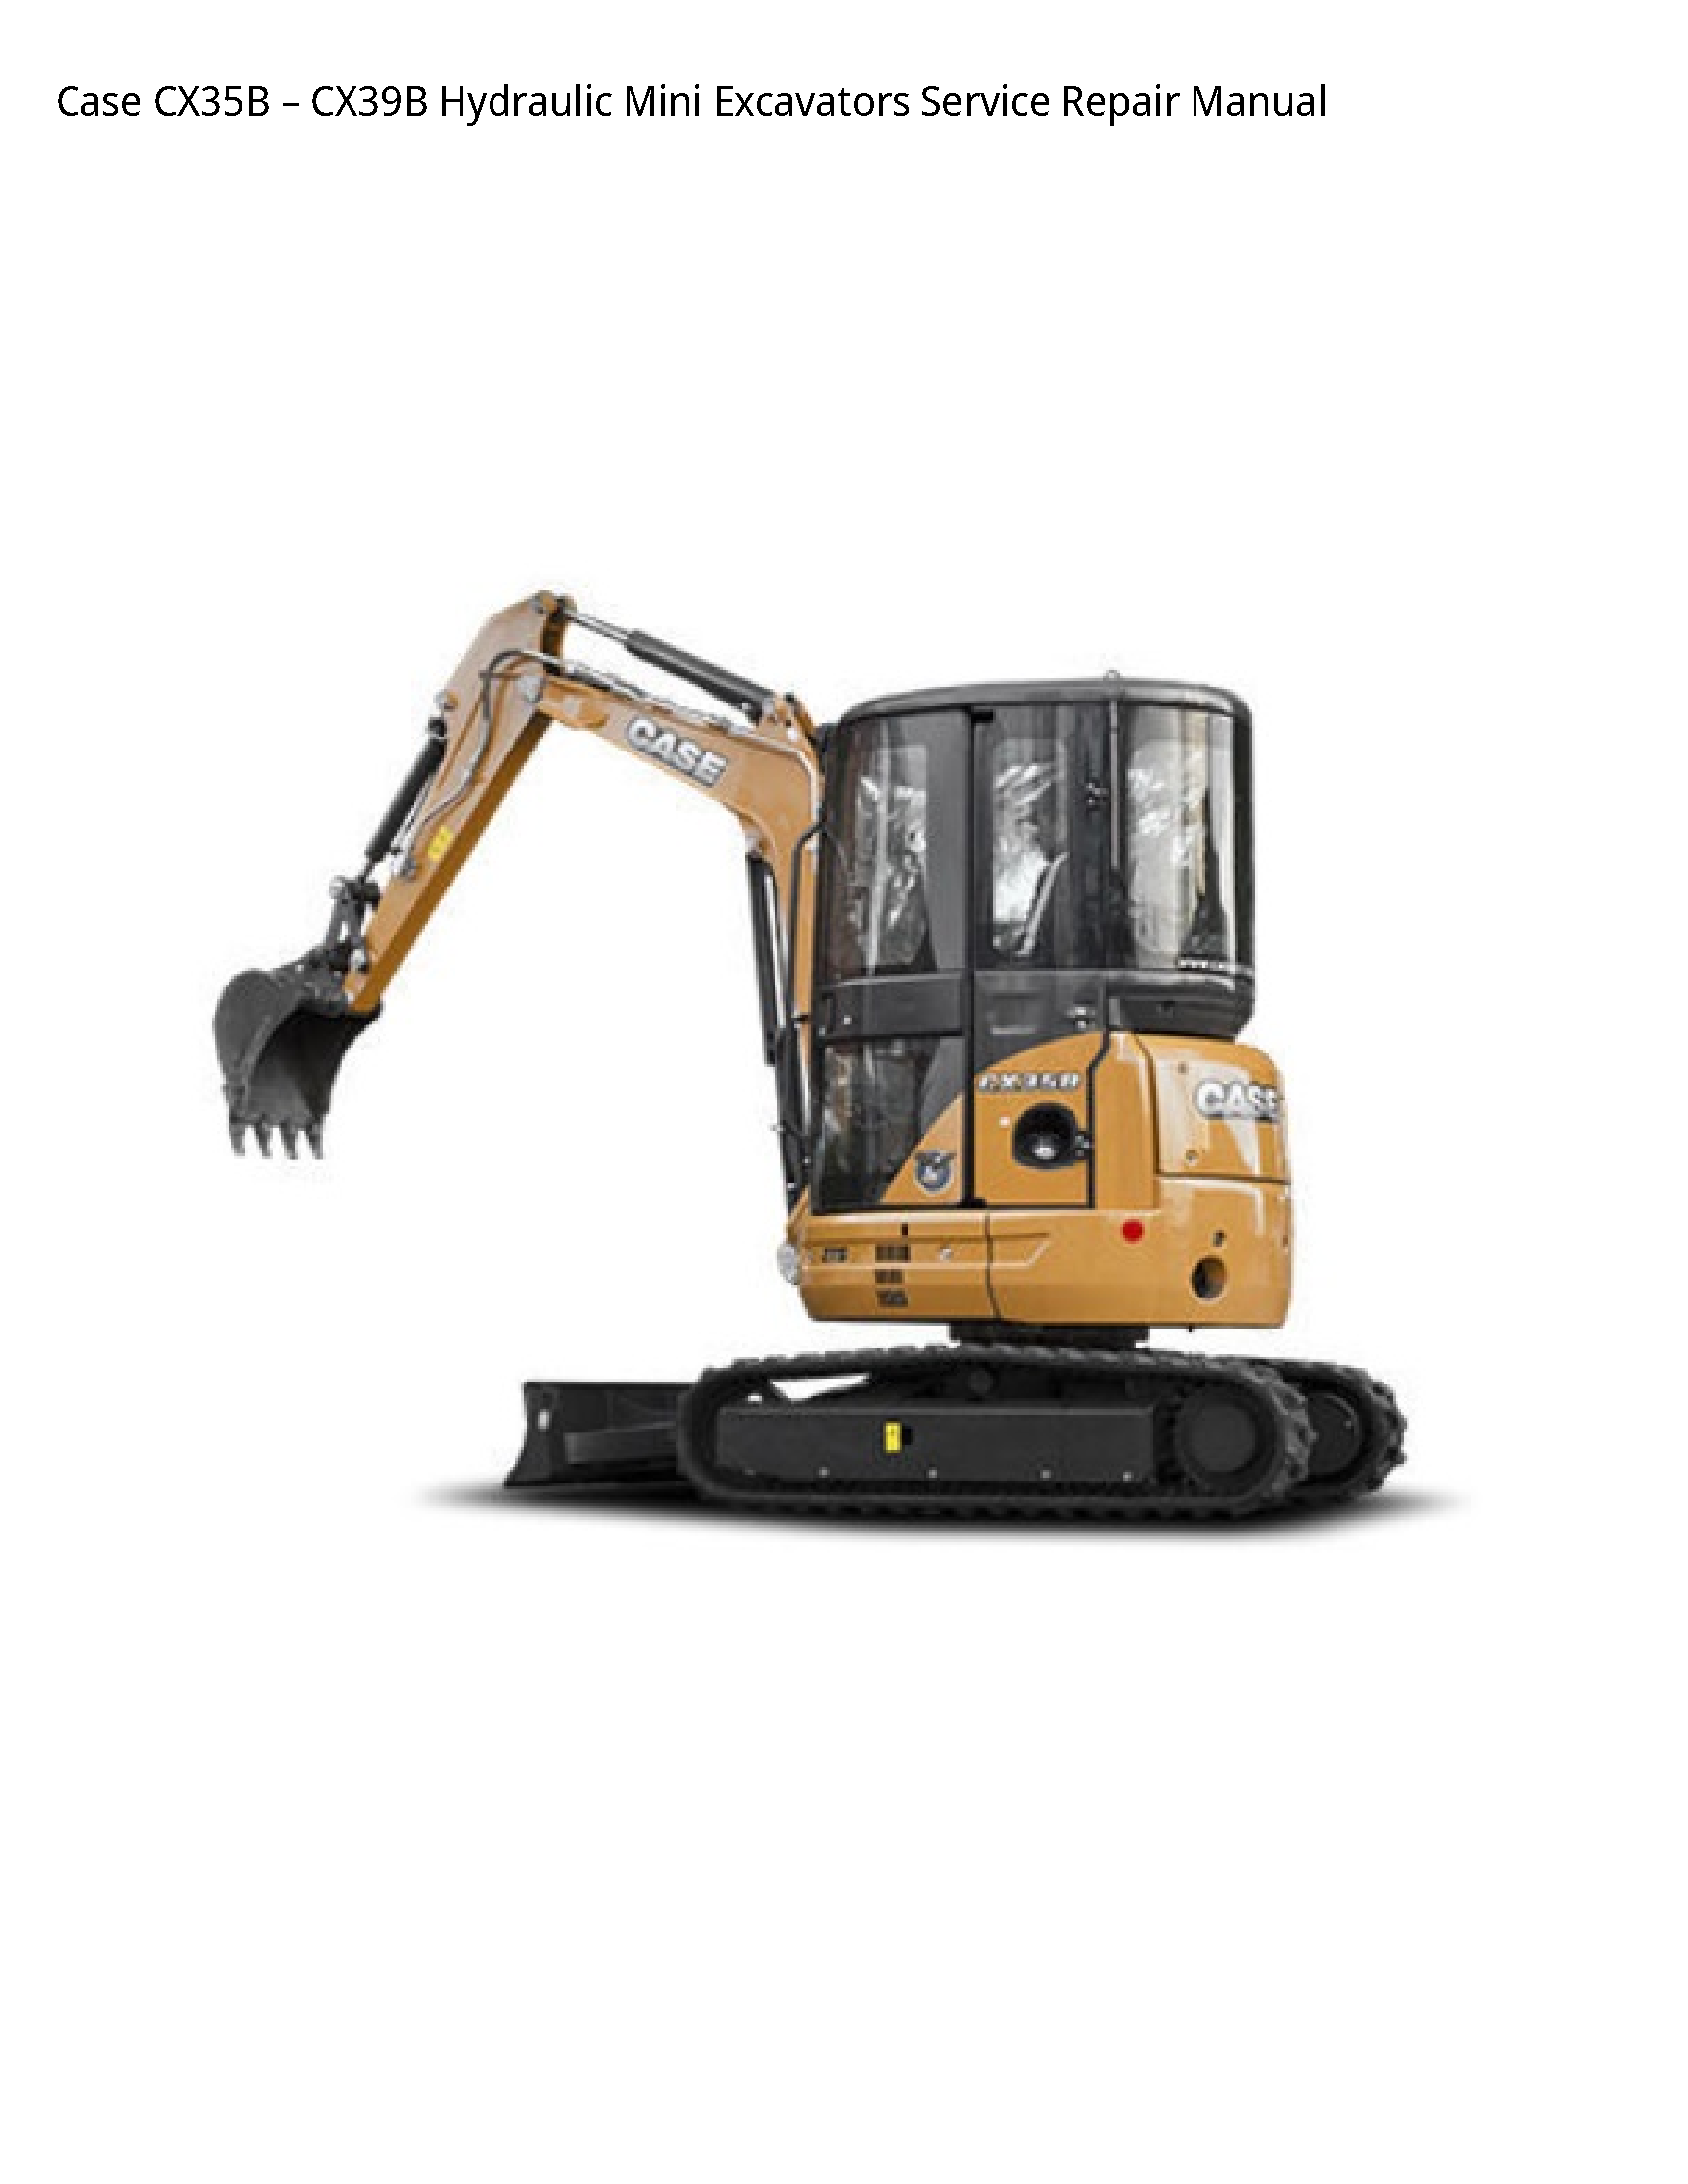 Case/Case IH CX35B Hydraulic Mini Excavators manual